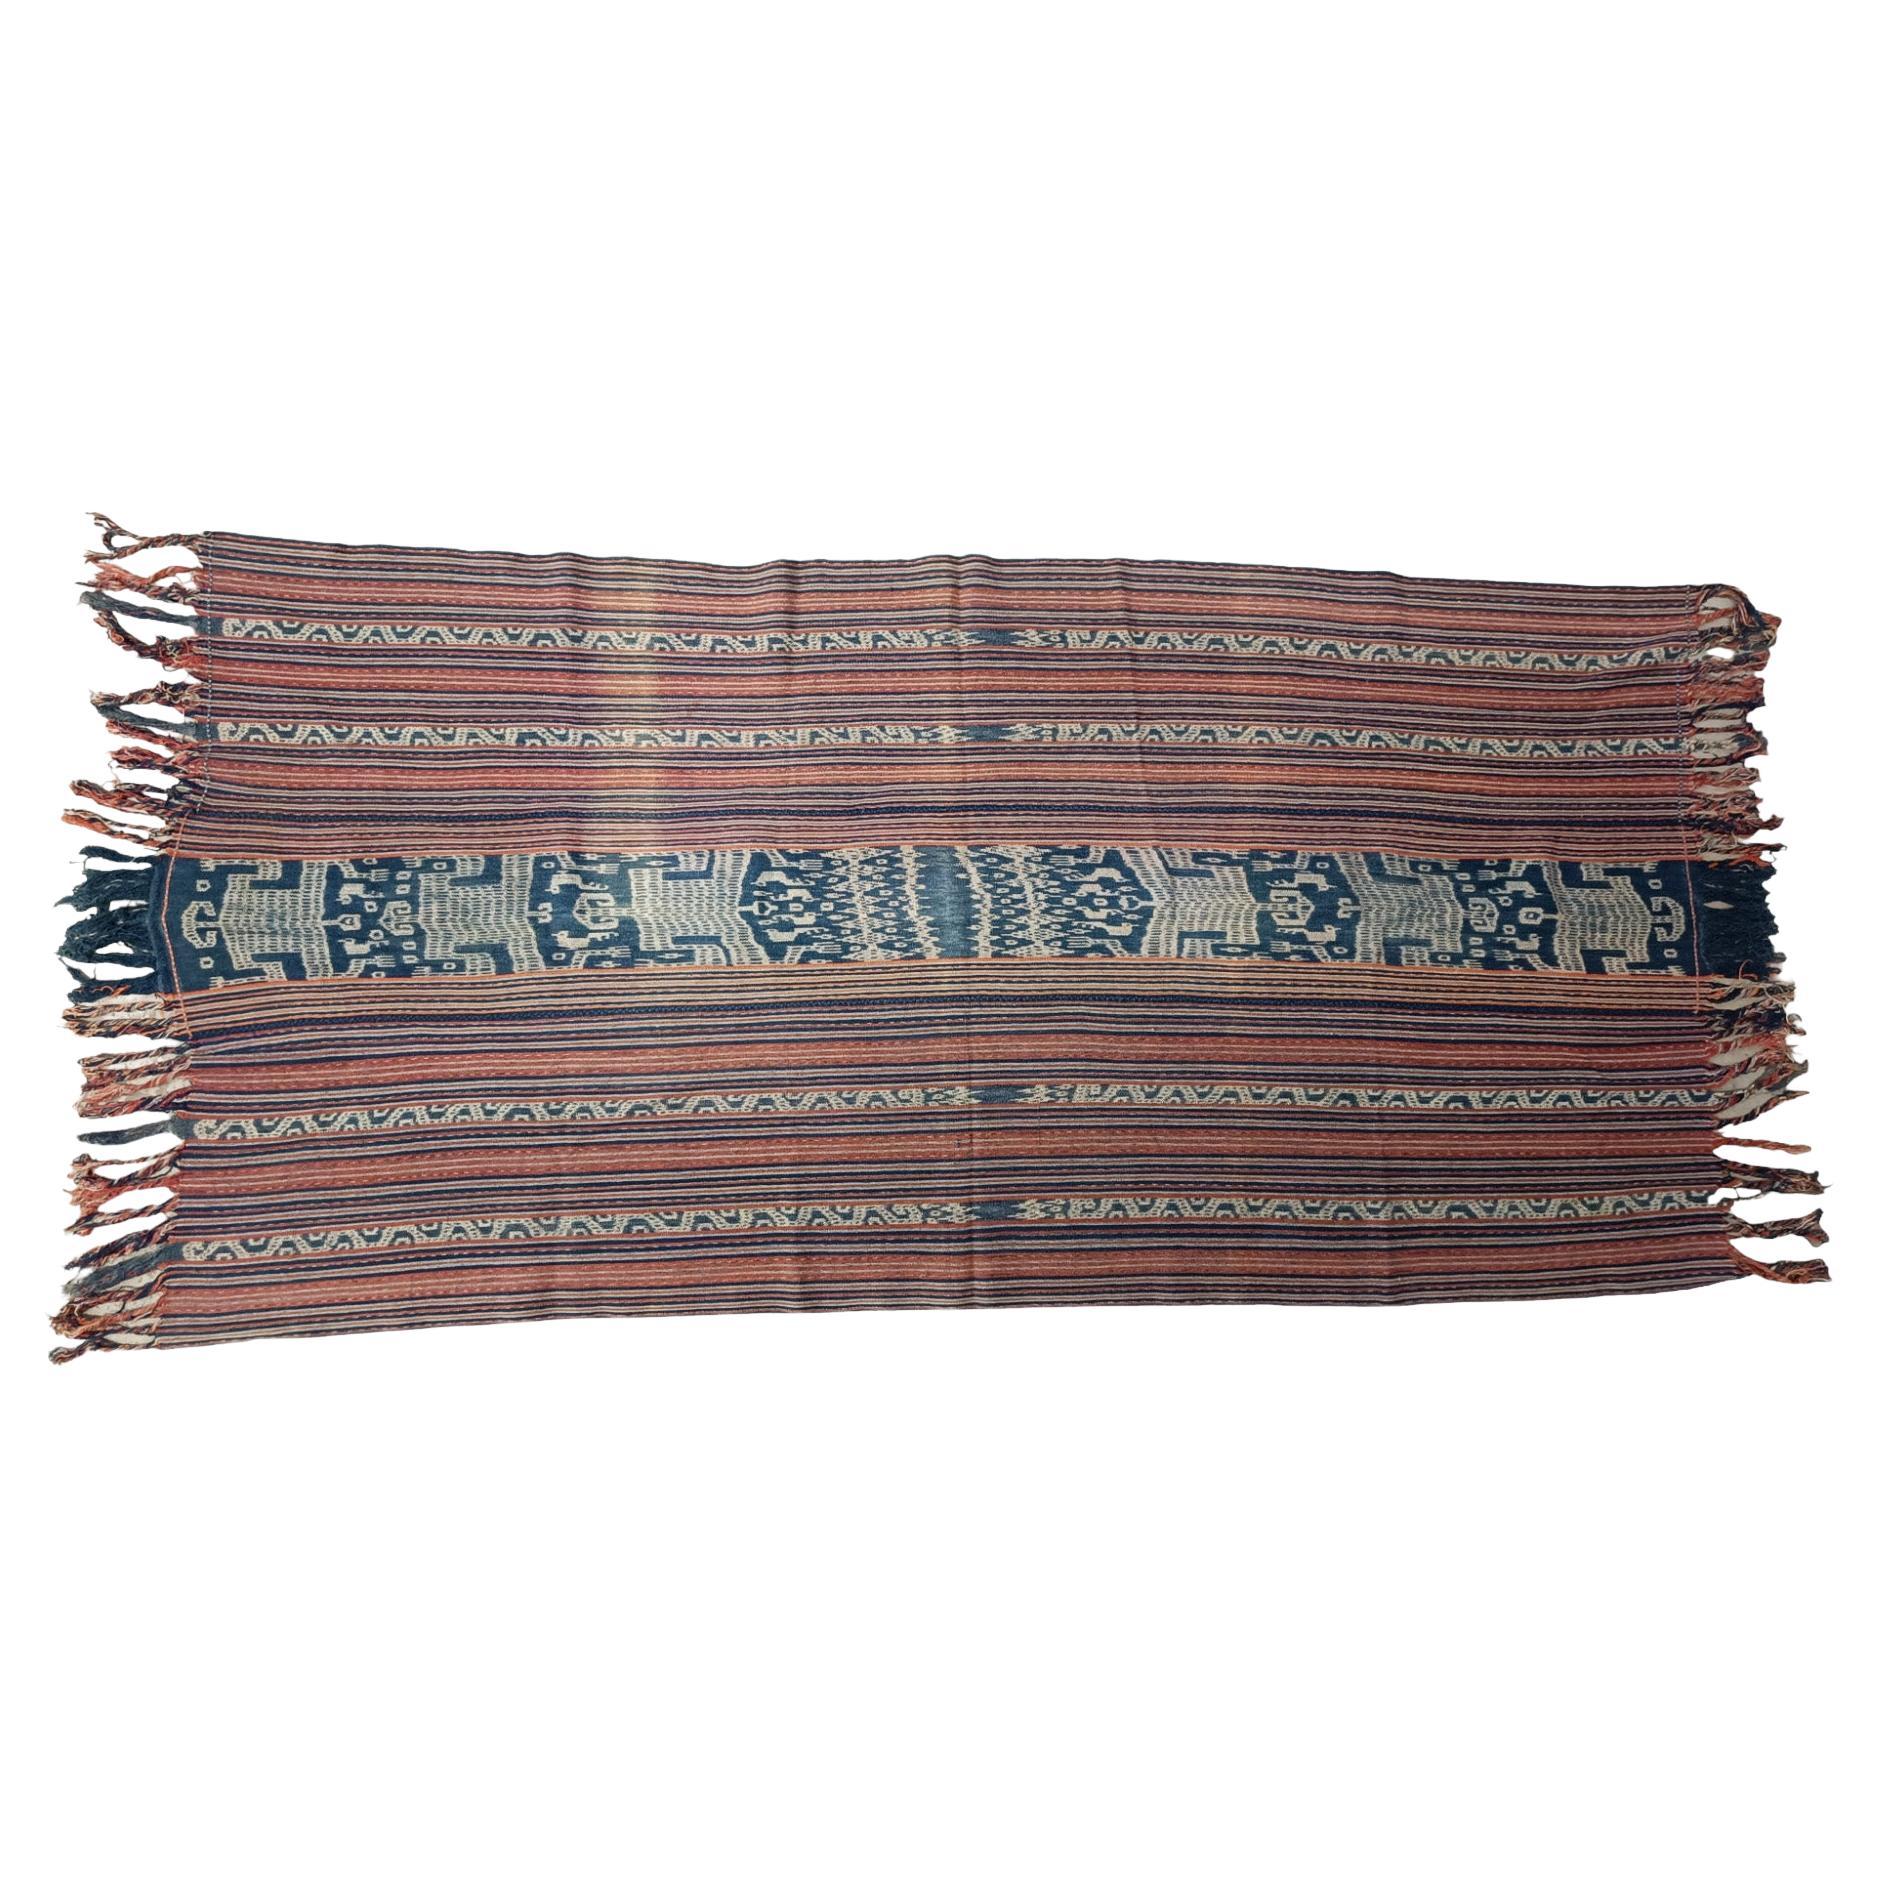 Vintage Ikat Cloth Timor Indonesia Asian Textiles Home Decor